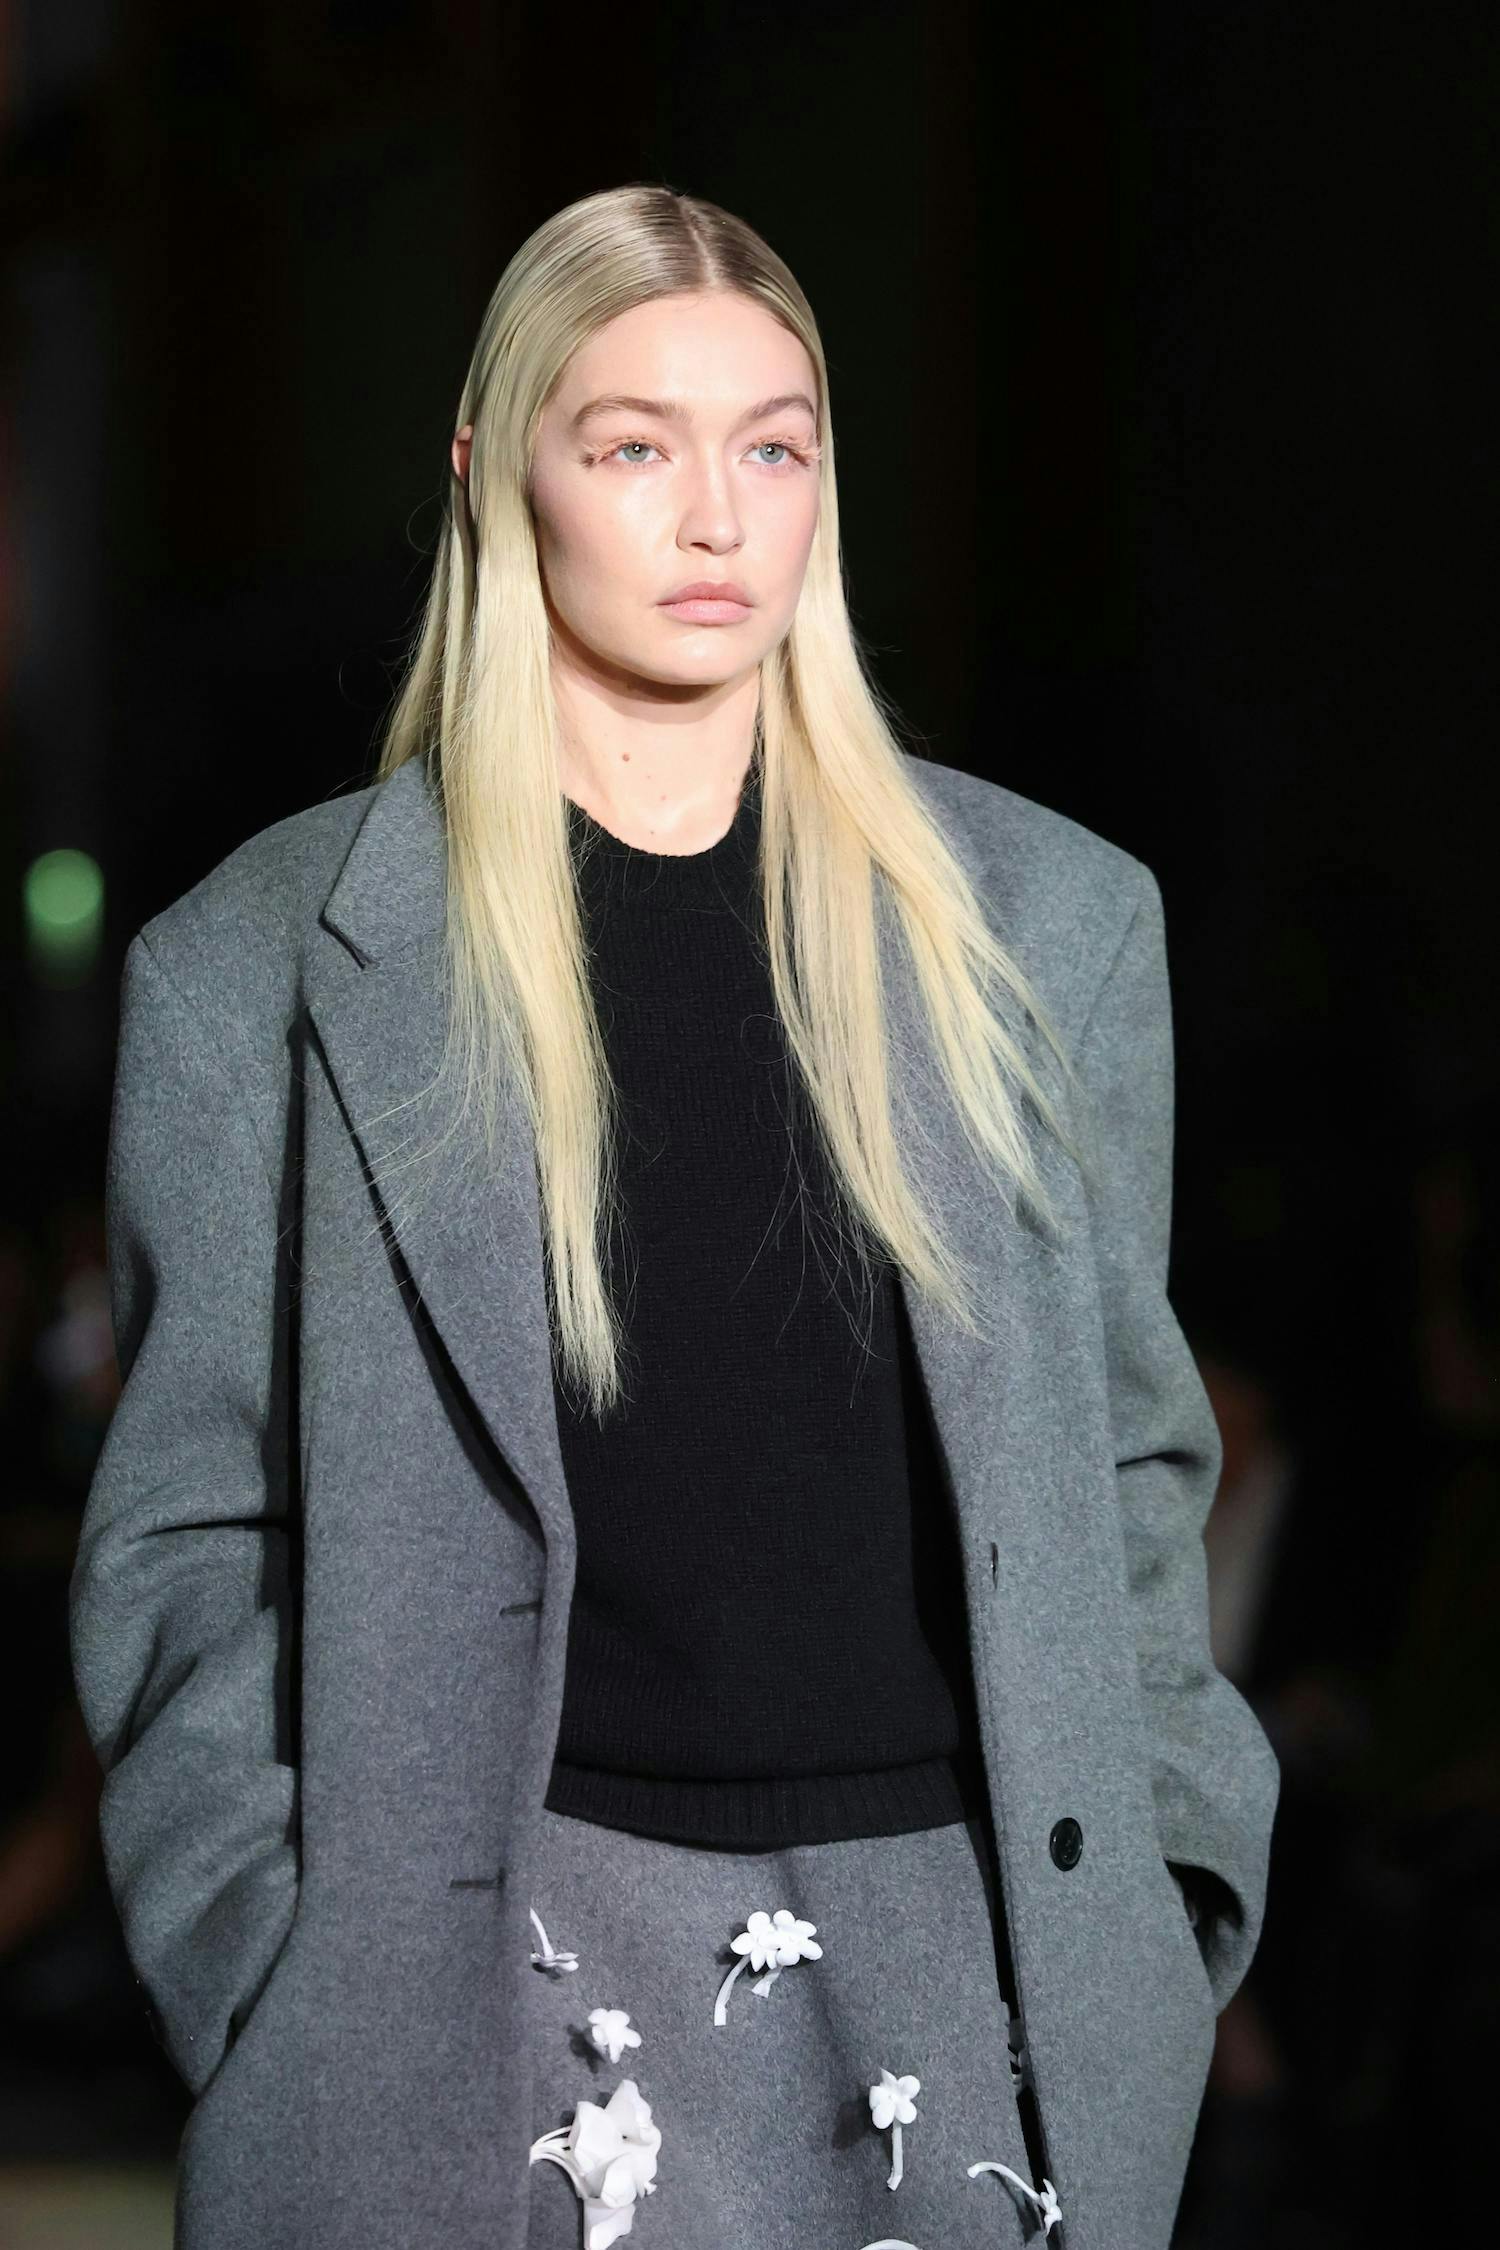 milan blonde person coat adult female woman fashion long sleeve jacket formal wear